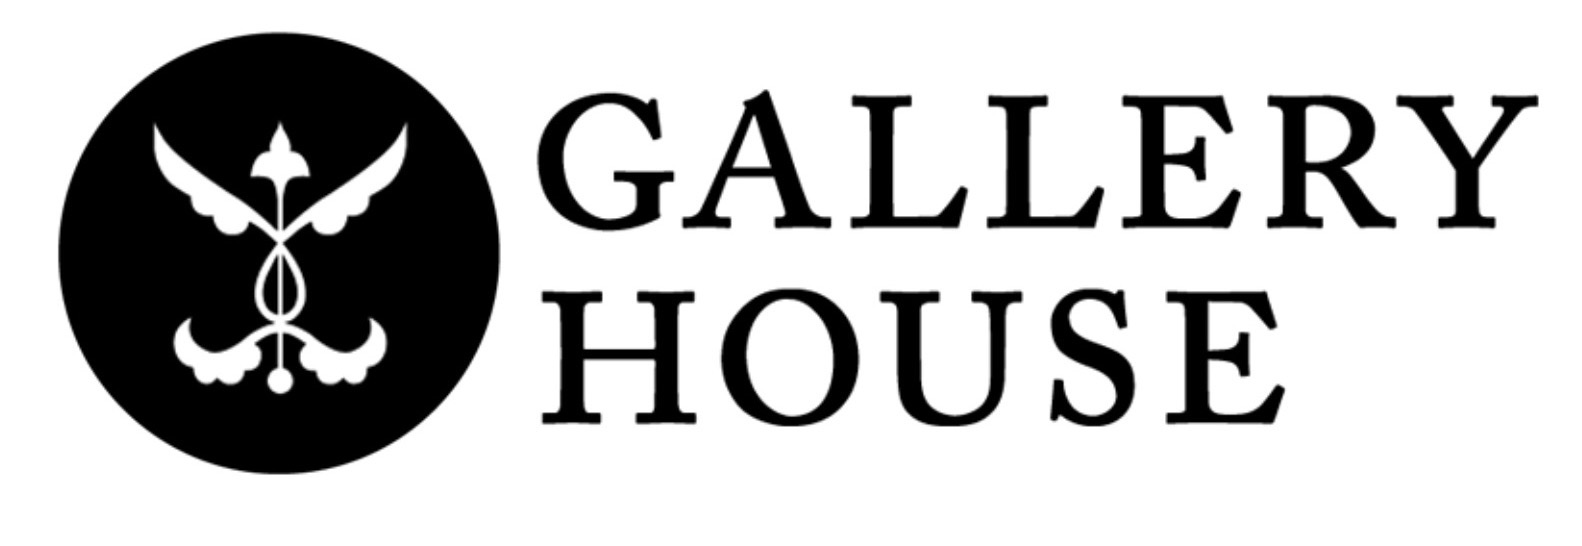 Gallery House Spring'23 Exhibit